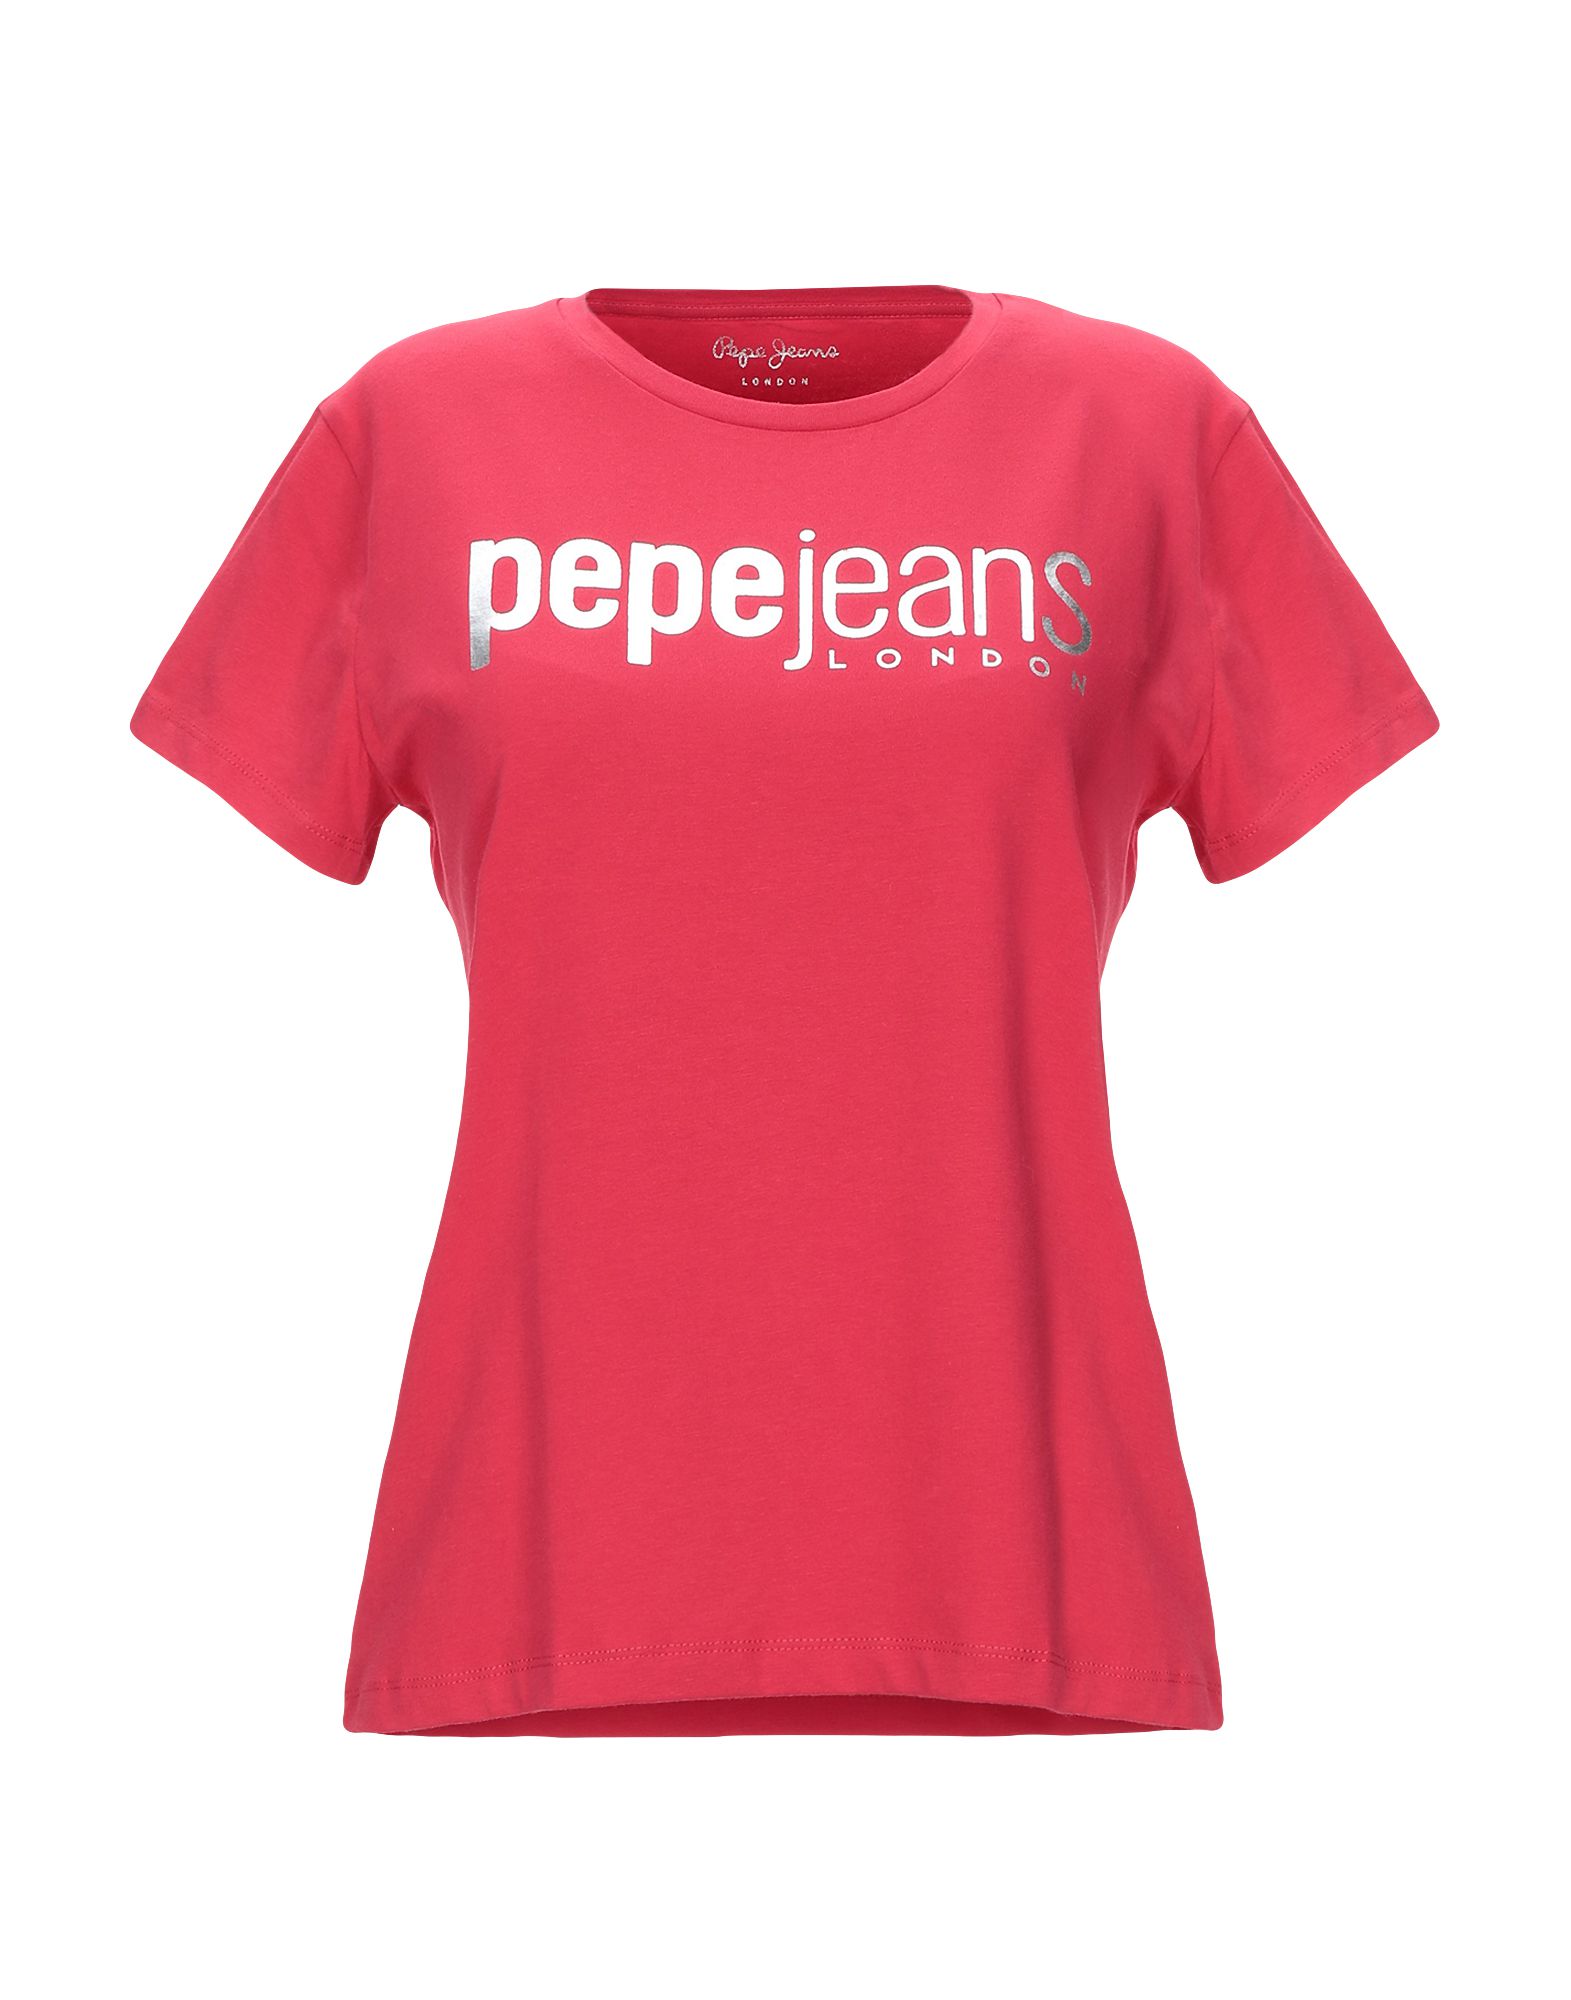 Футболка пепе. Pepe Jeans майка женская. Футболка Пепе джинс. Топ Pepe Jeans. Pepe джинс футболки женские.